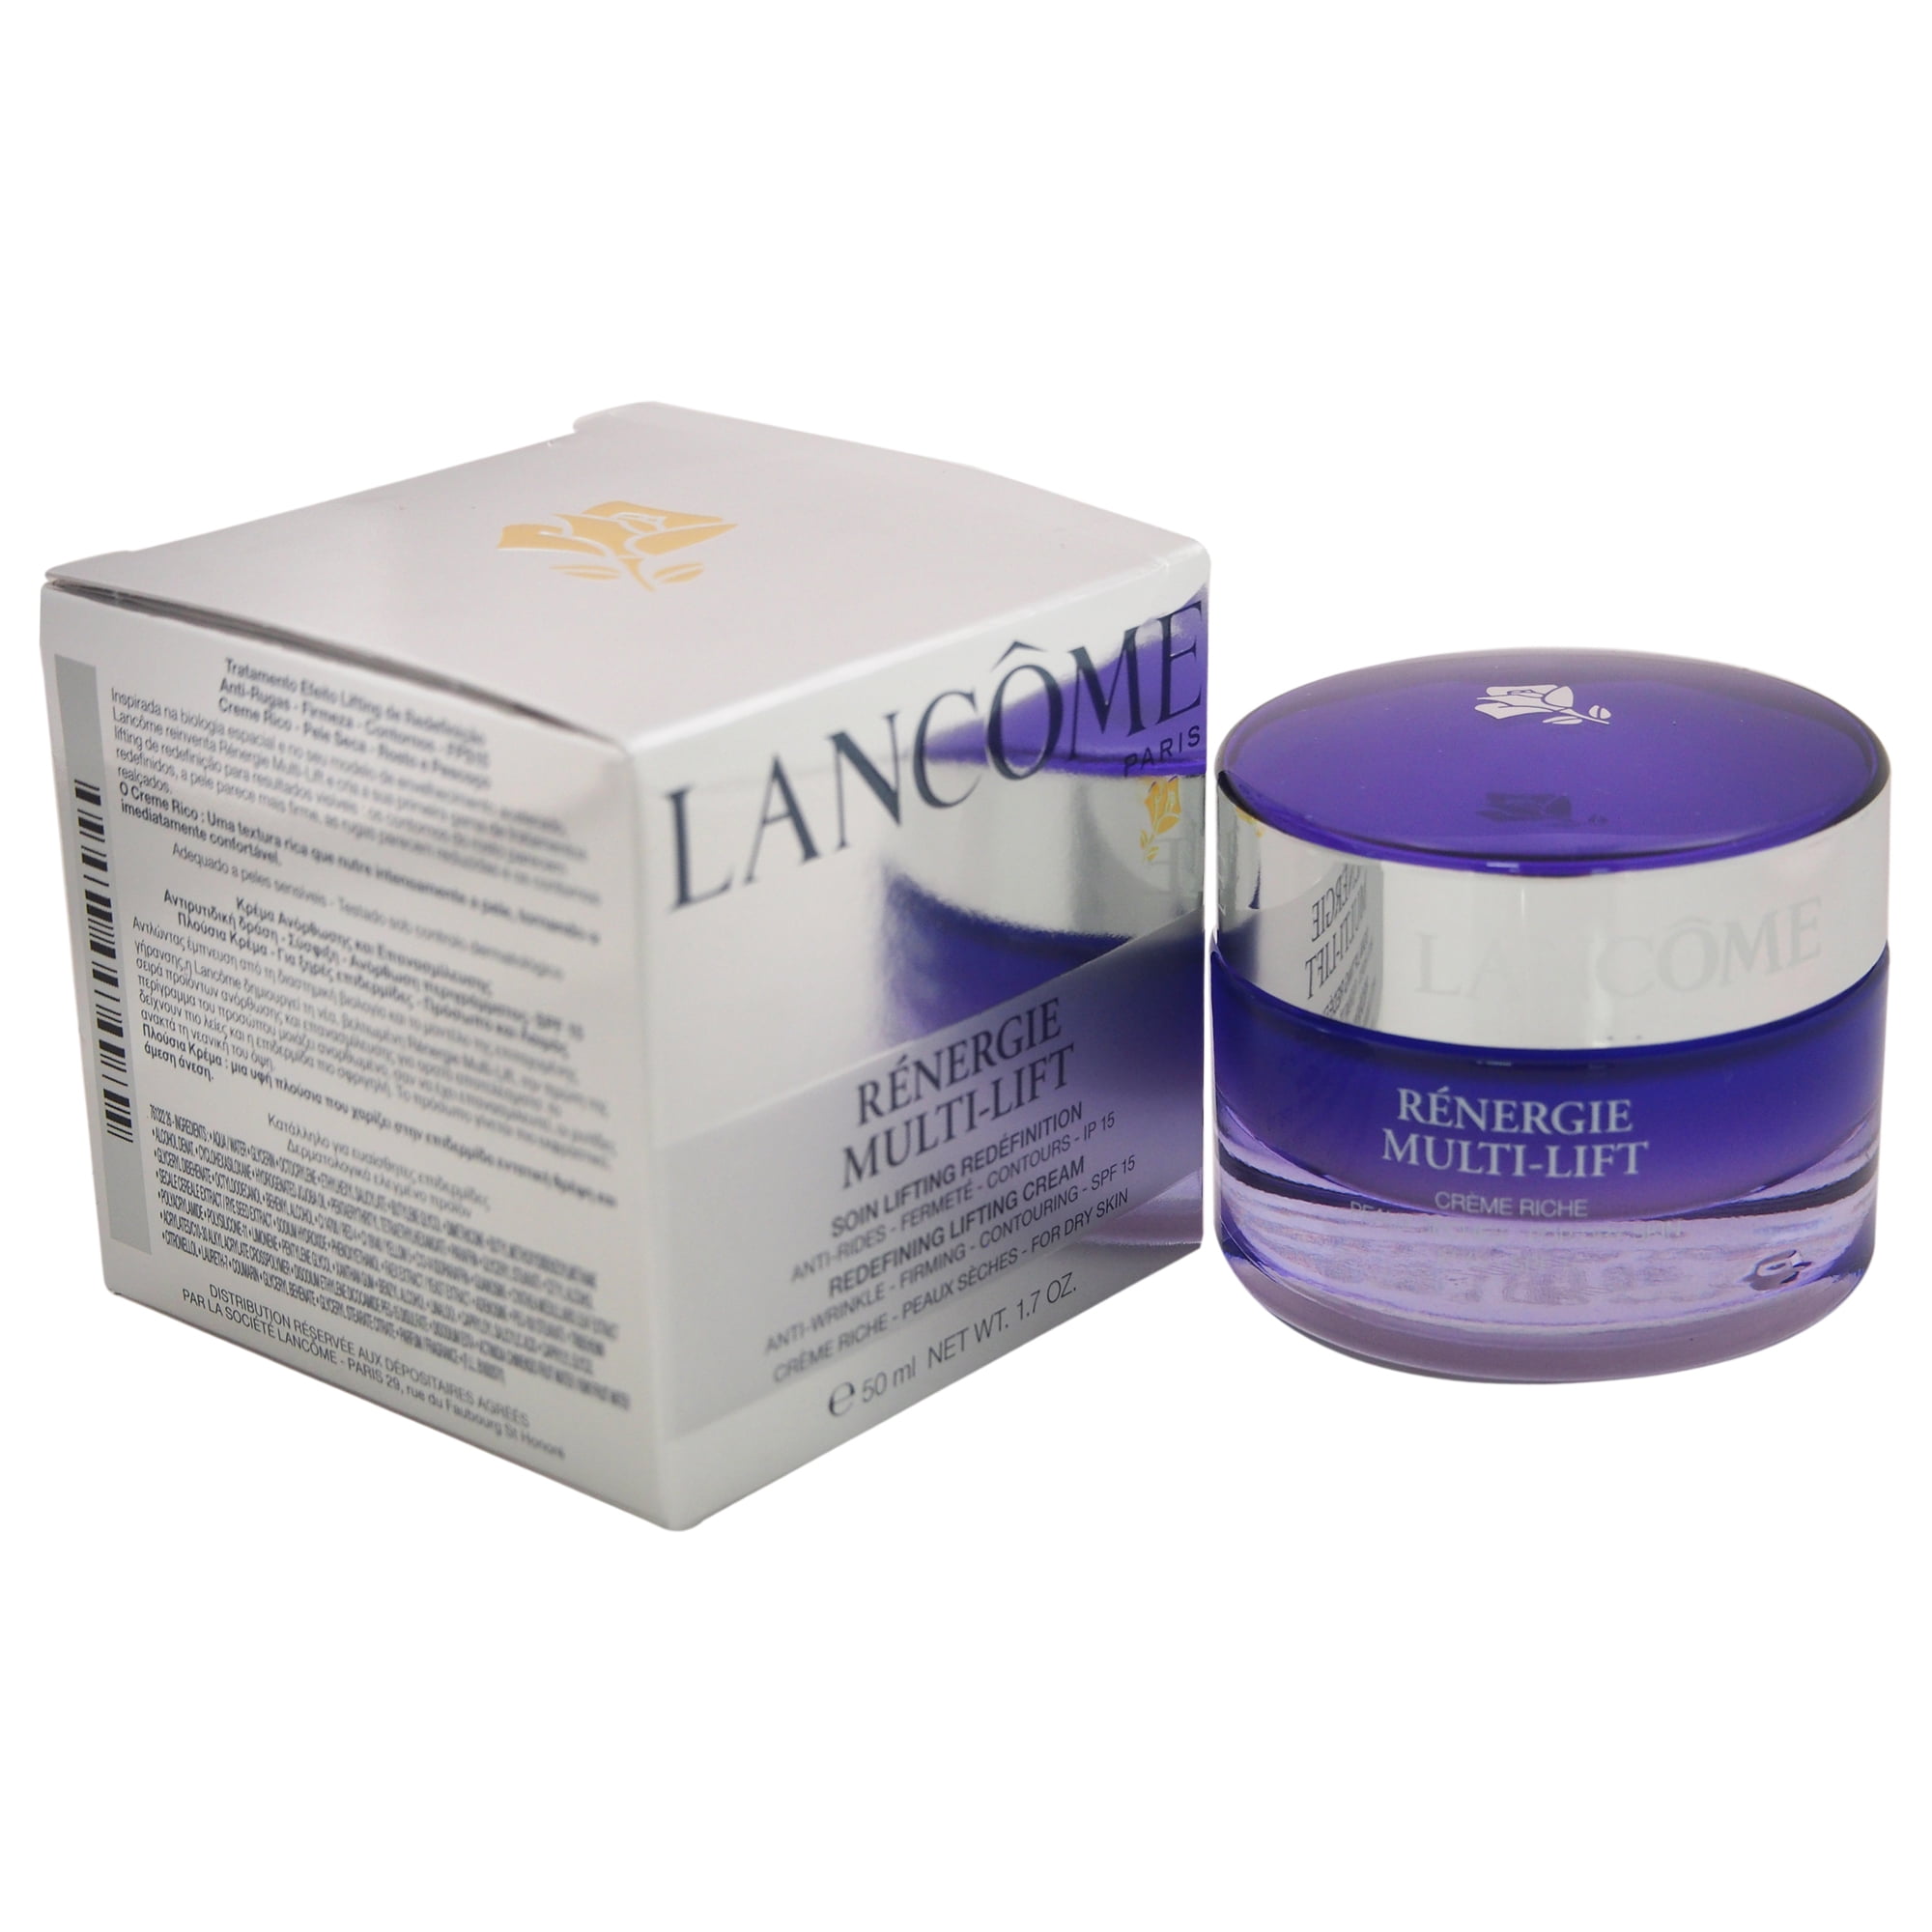 Lancome/renergie Multi-Lift Redefining Lifting Cream Dry Skin 1.7 oz (50 ml)